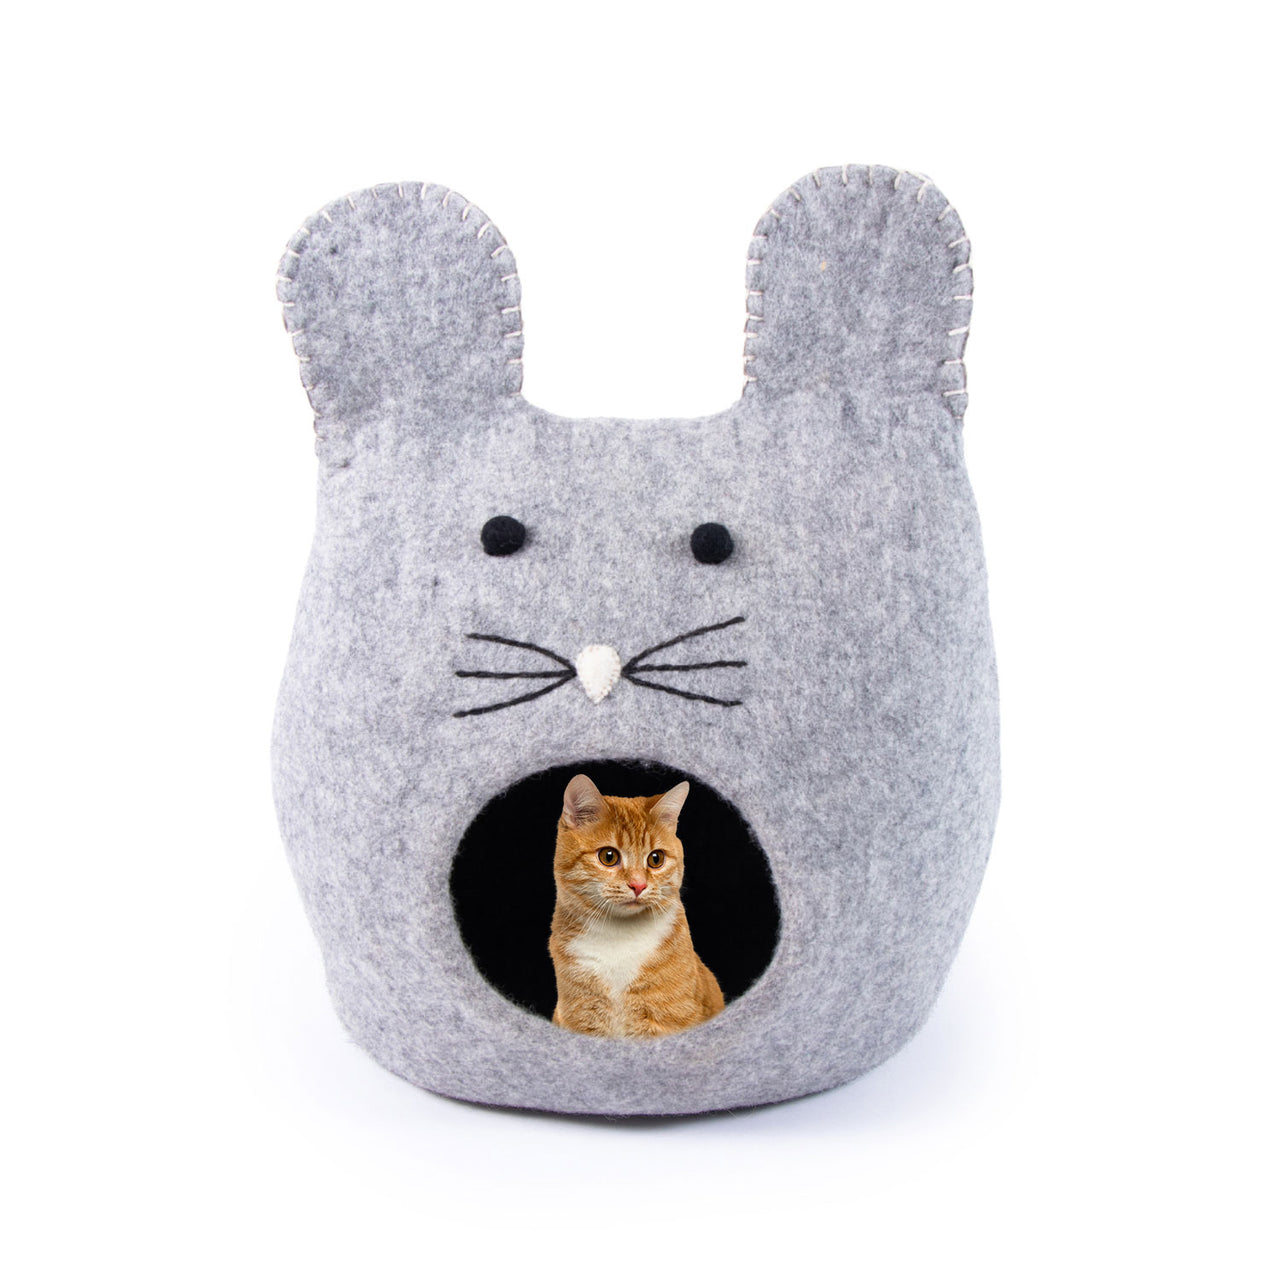 Cat like merino wool felted cat house